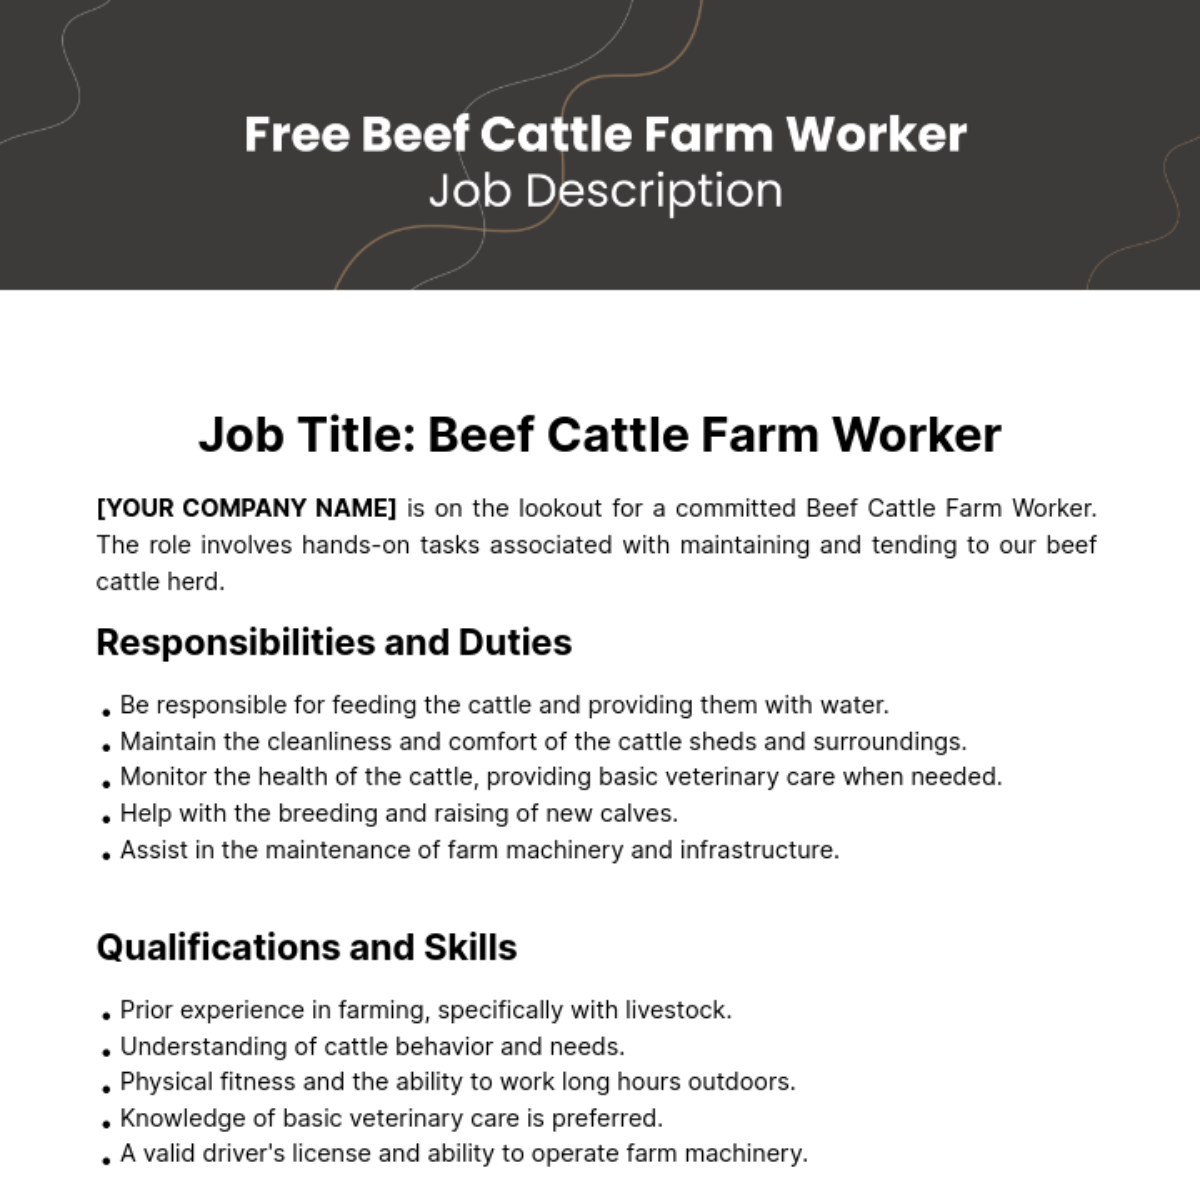 Free Beef Cattle Farm Worker Job Description Template